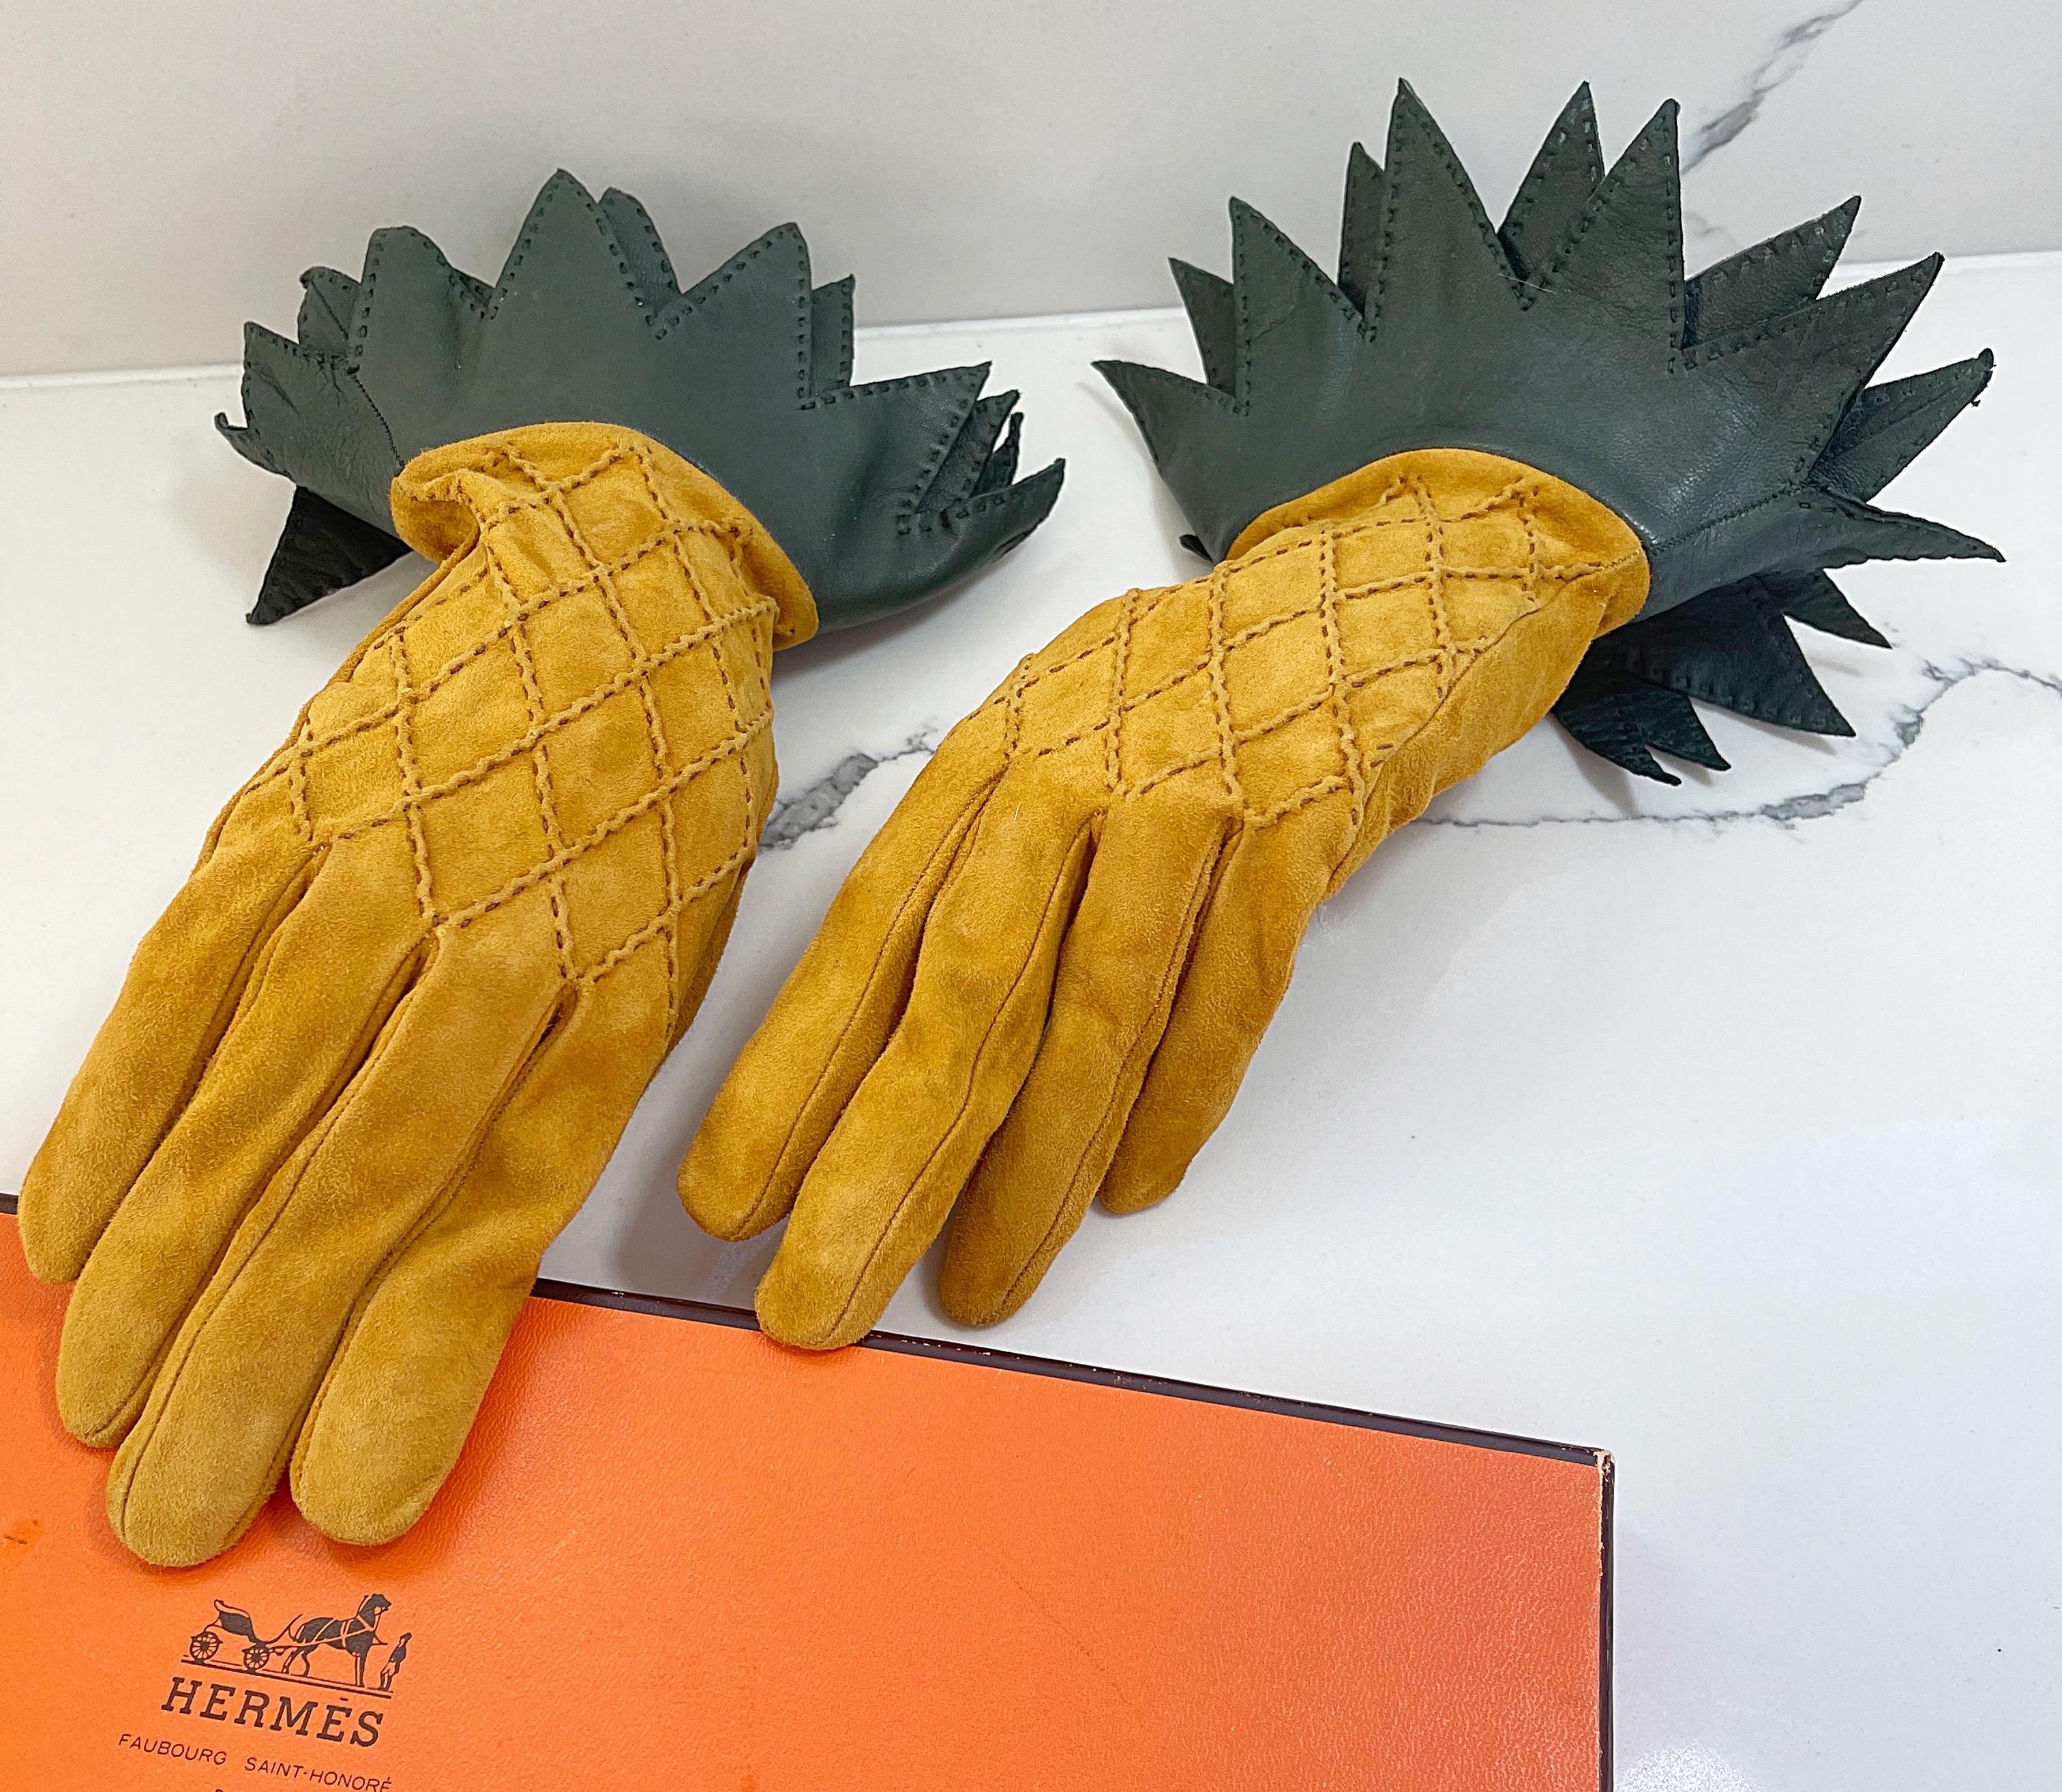 Hermès 1990s Vintage Pineapple Novelty Suede Leather Size 7.5 90s Gloves For Sale 4